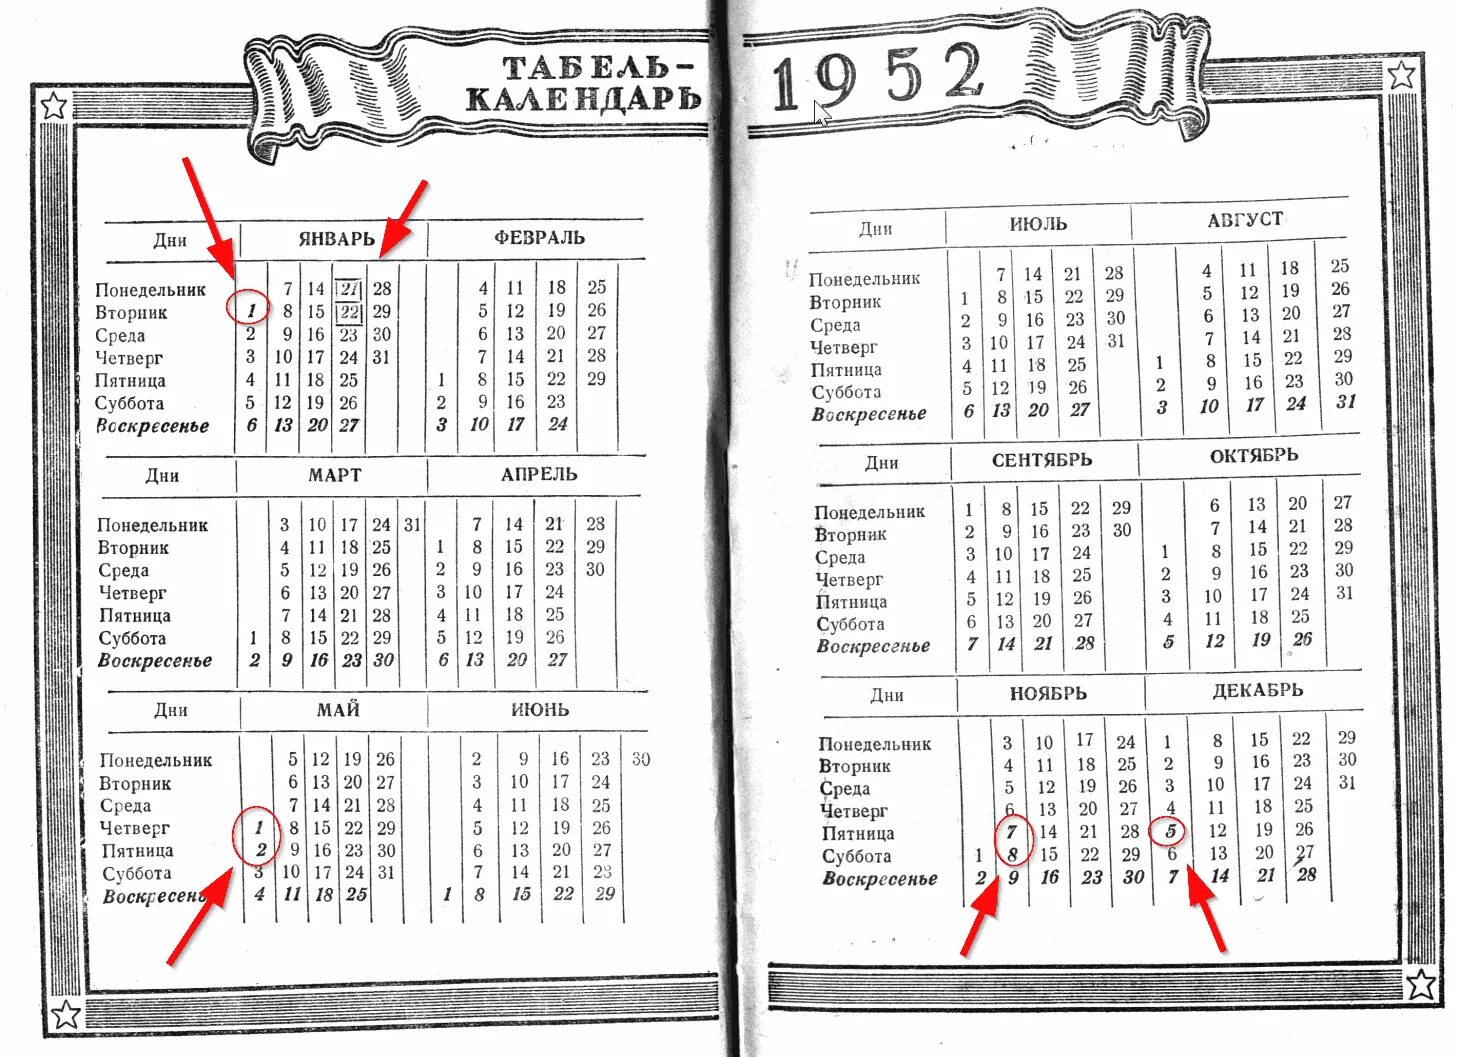 Какой день недели был 22 июня. Календарь 1952 года. Календарь 1952 года по месяцам и дням. Табель календарь 1952.